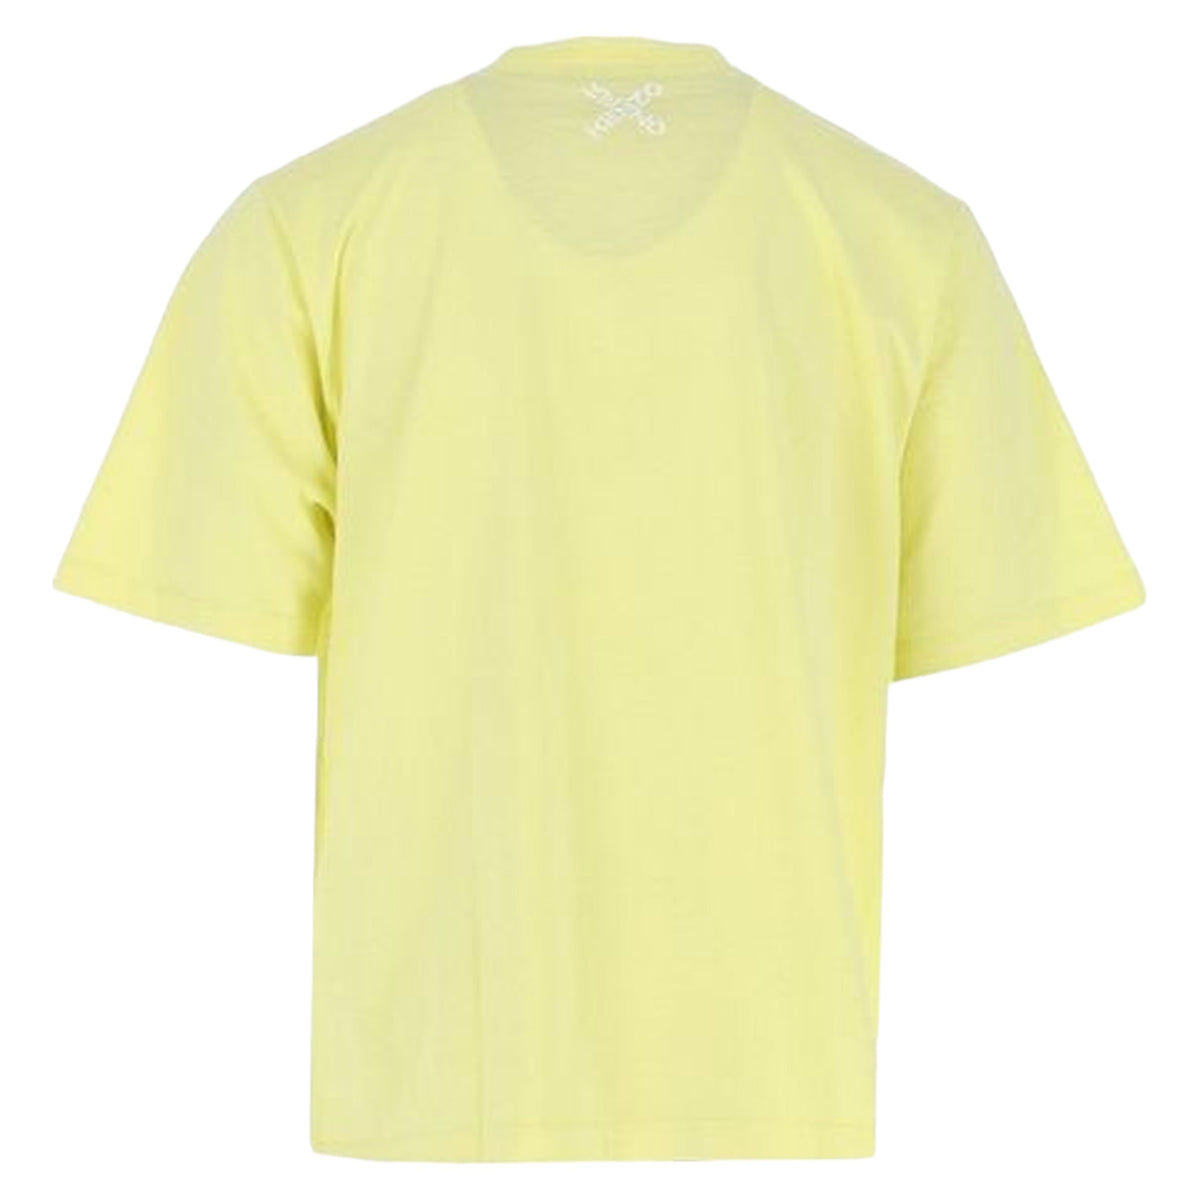 Kenzo Men's Sport 'Big X' Short Sleeve T-Shirt